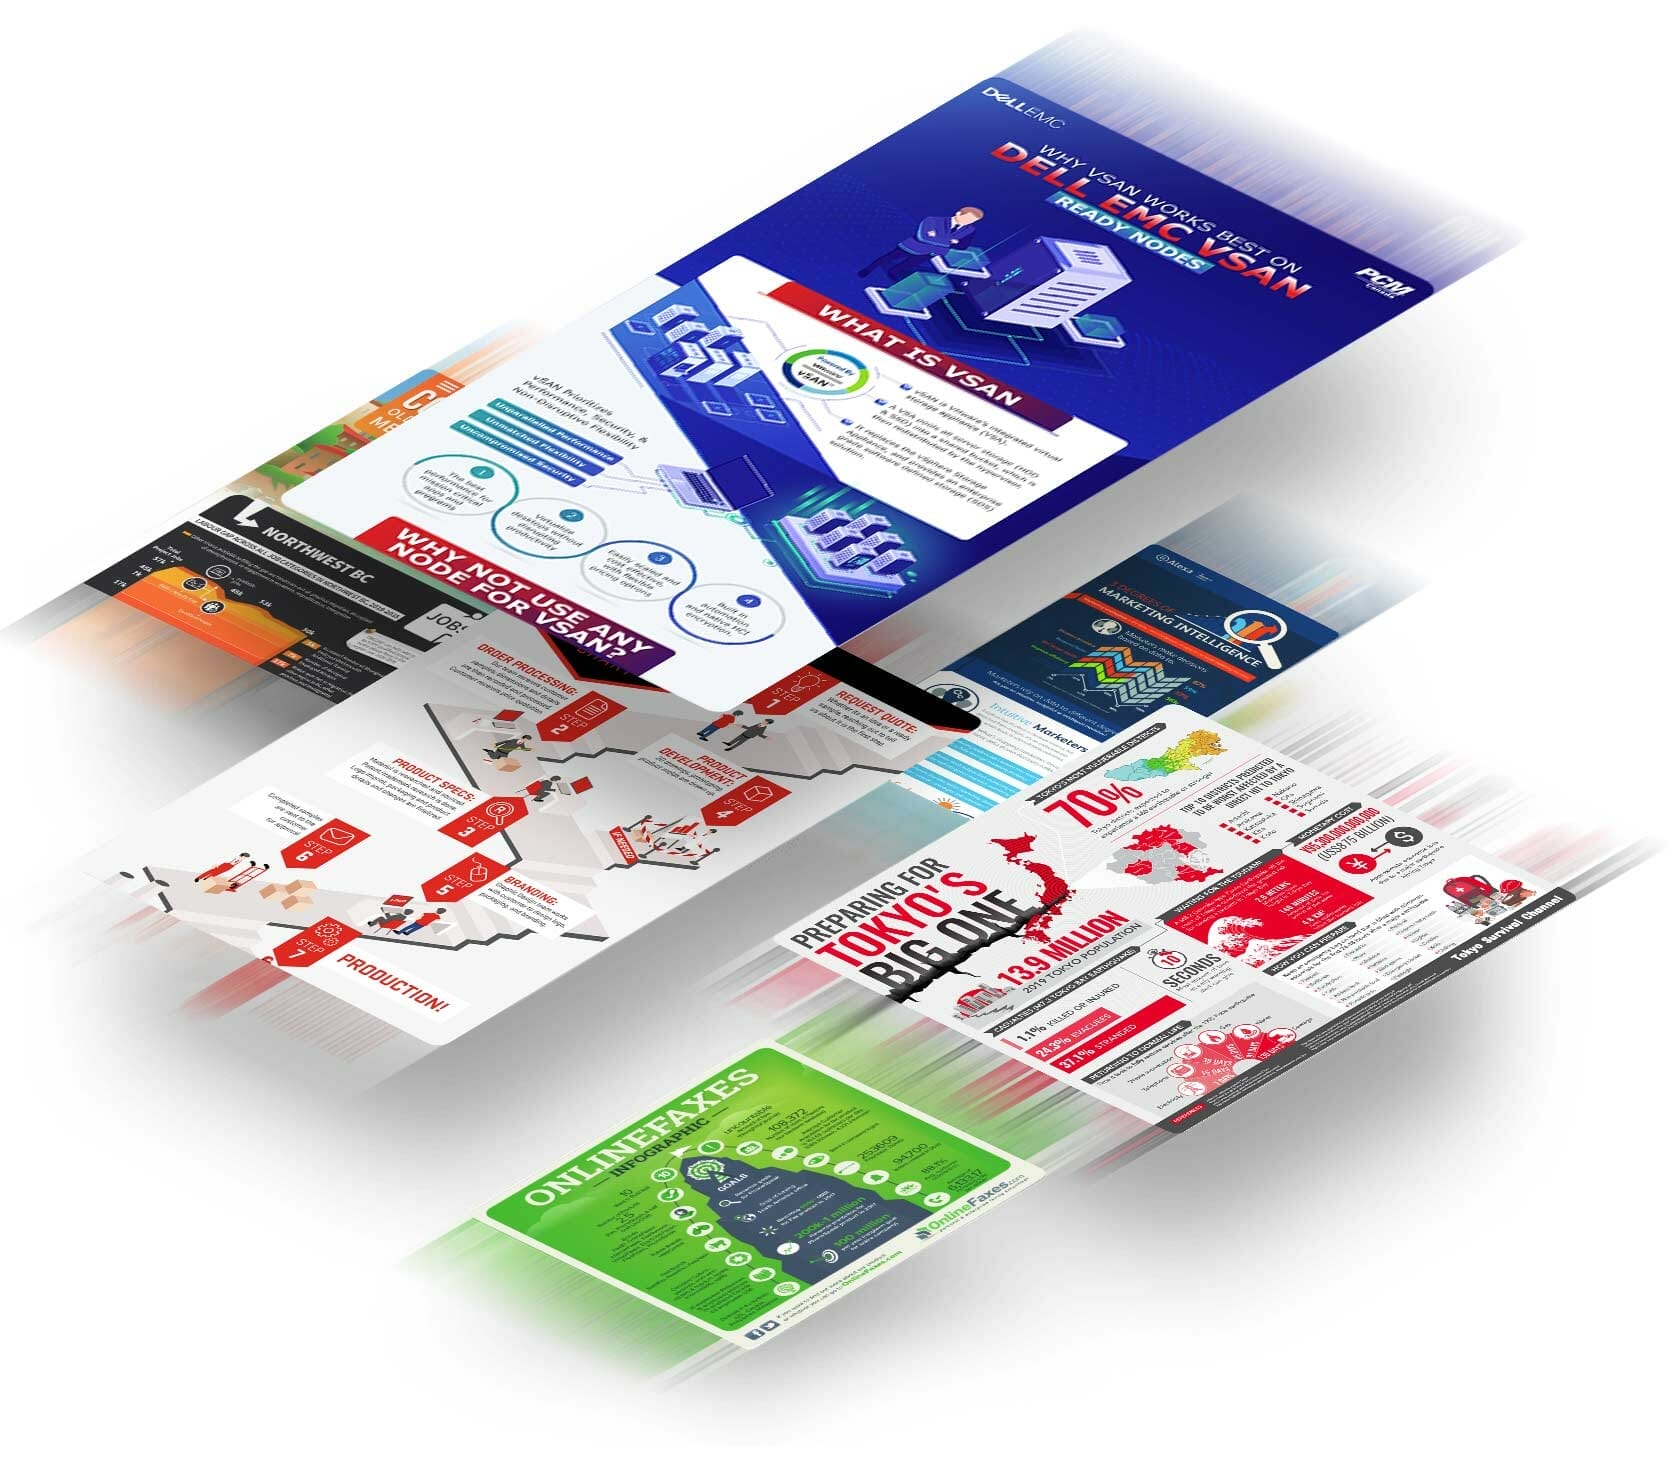 Infographic Design Agency,Ebook Designer,Whitepaper Designer,Infographic Design Company,Infographic Designer